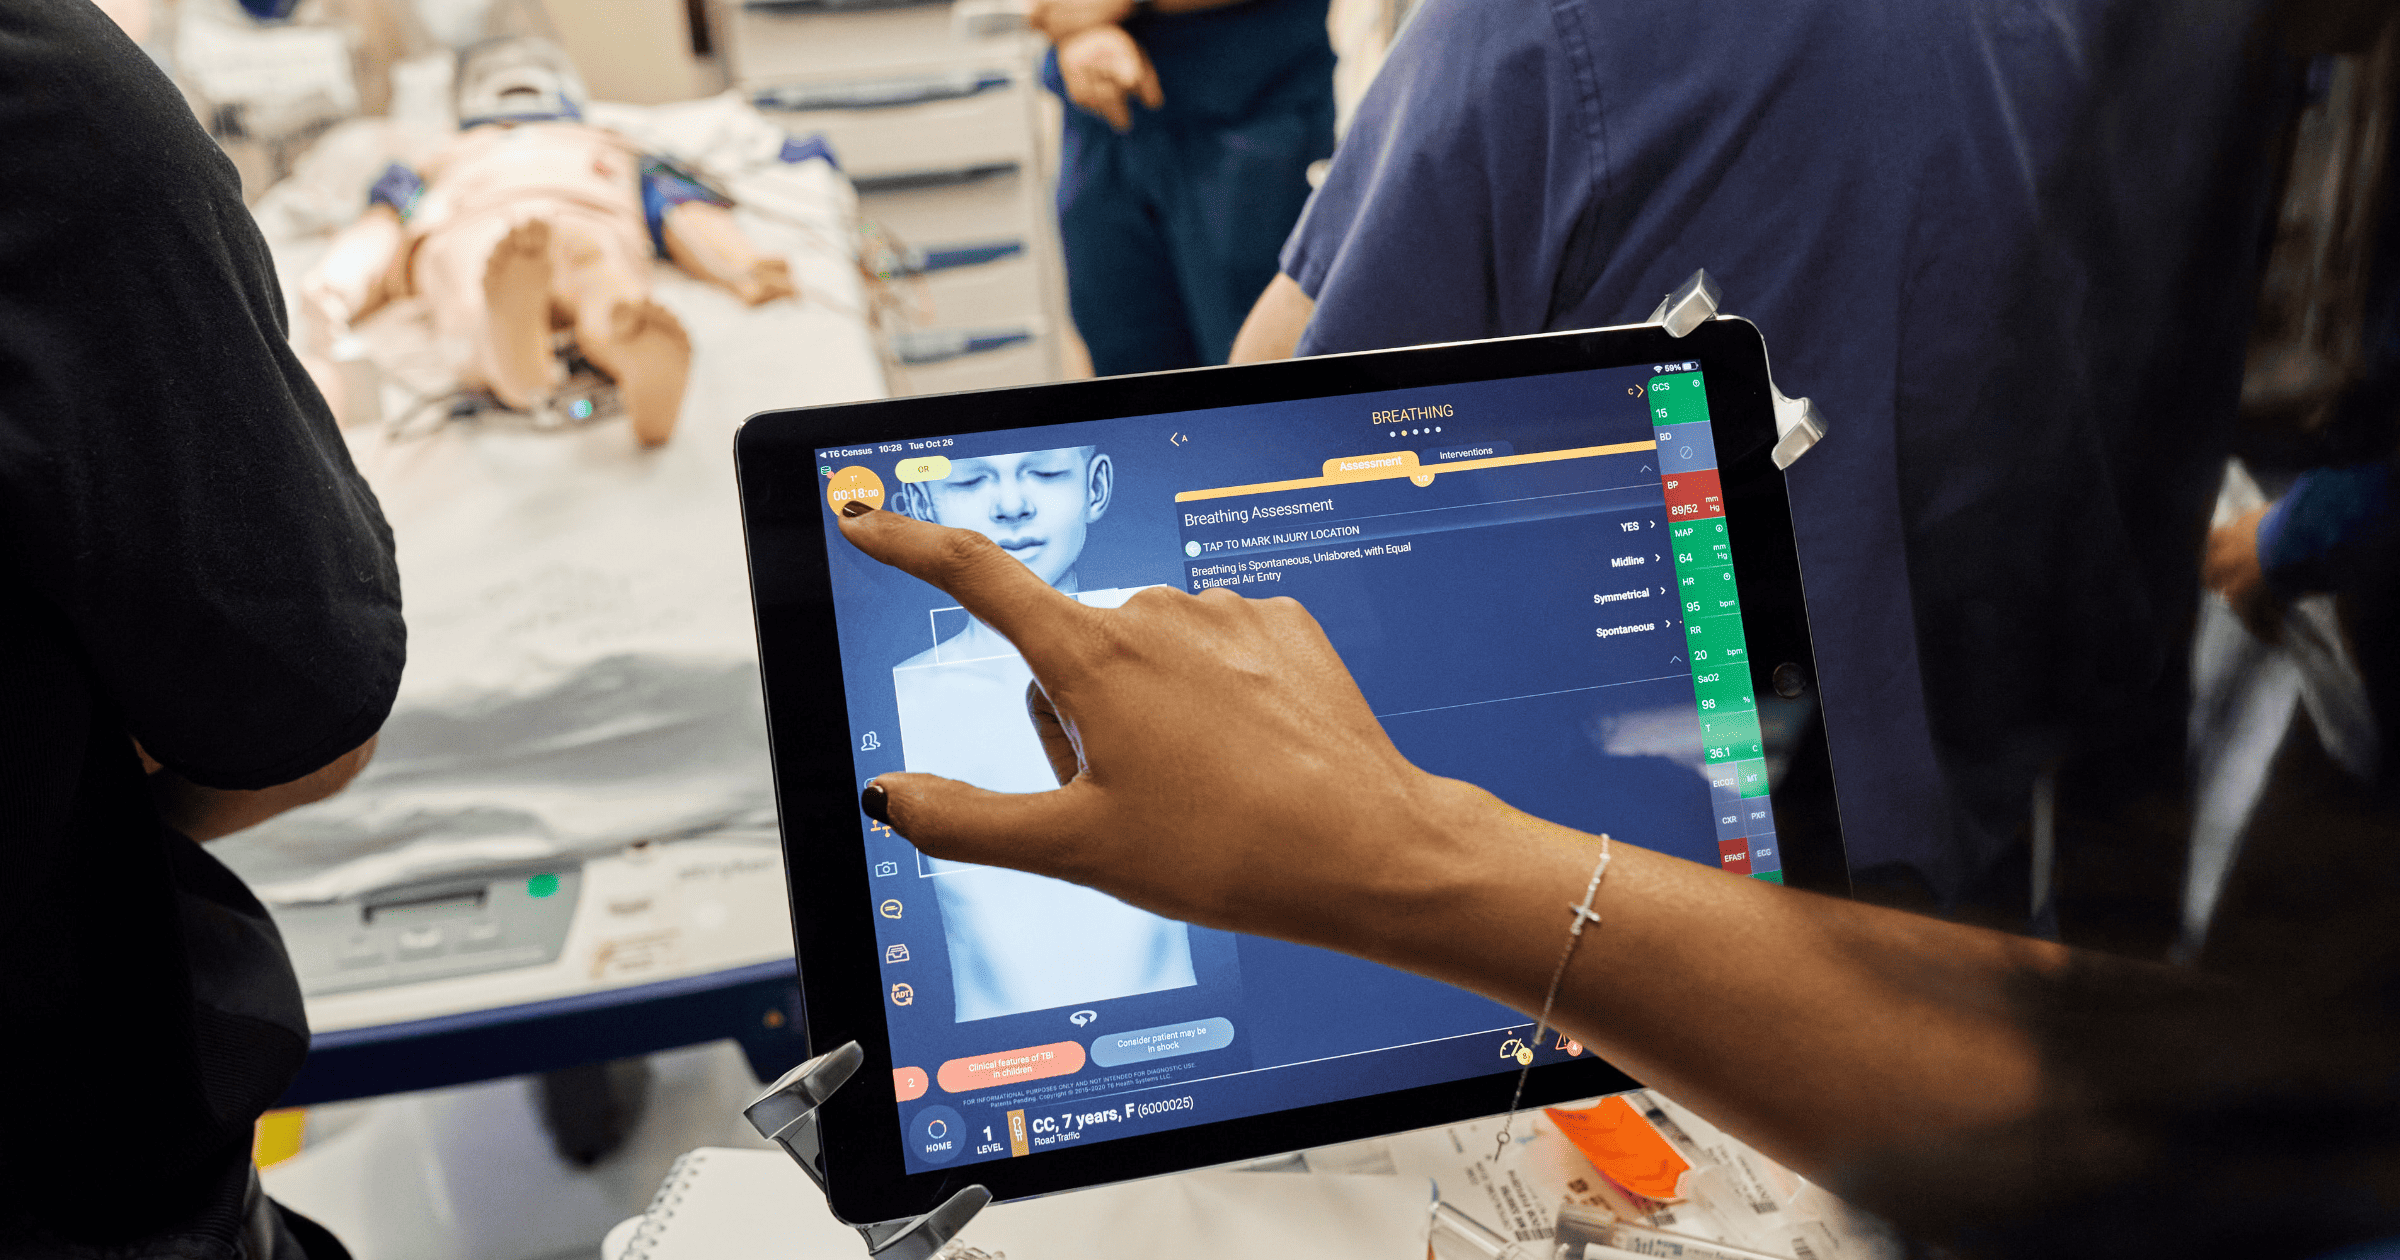 Apple iPad running T6 App for trauma medicine